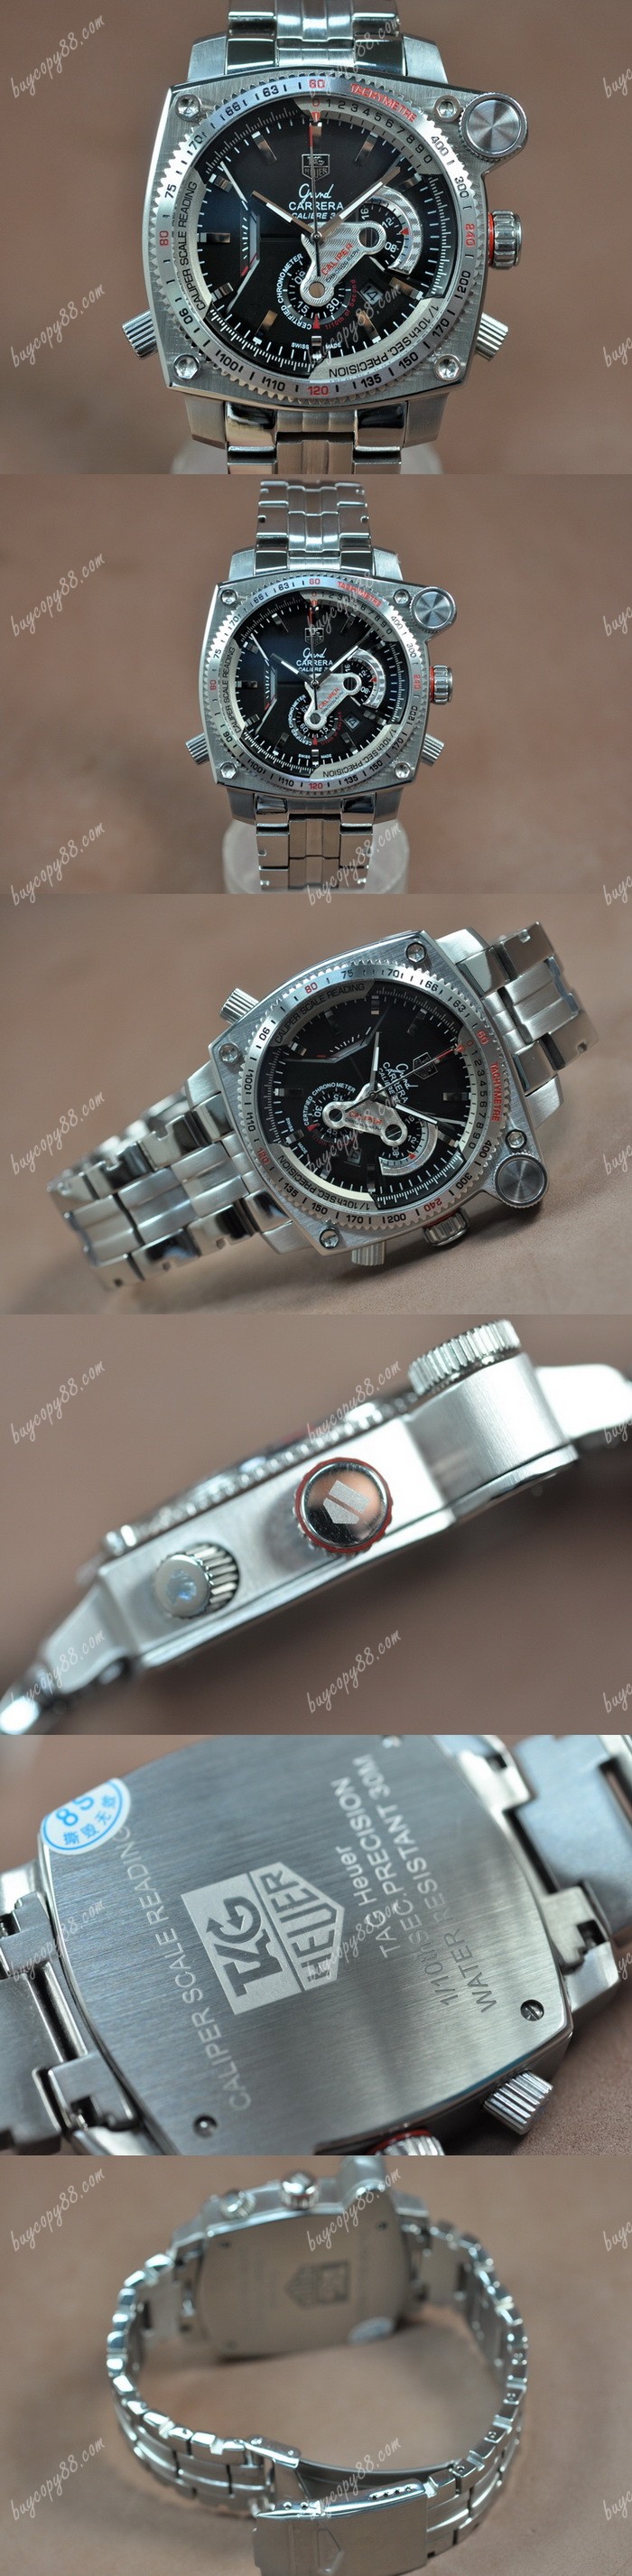  豪雅錶Tag Heuer Watches Grand Carrera Calibre 36 SS/SS Black Dial Jap Quartz石英錶0